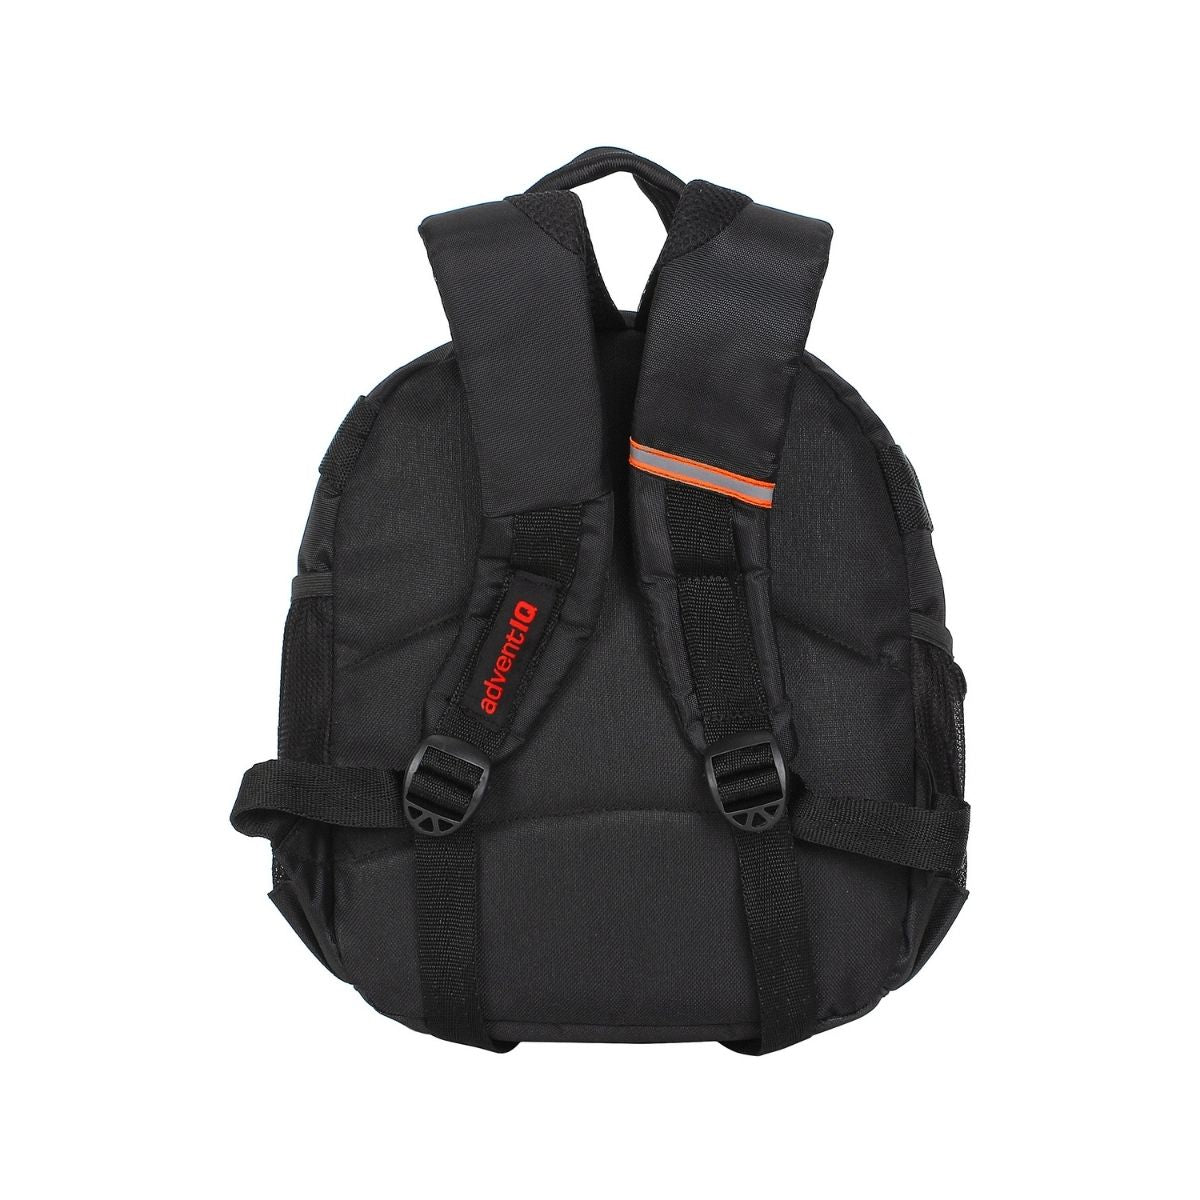 AdventIQ: DSLR / SLR Camera Backpack - Outdoor Travel Gear 4